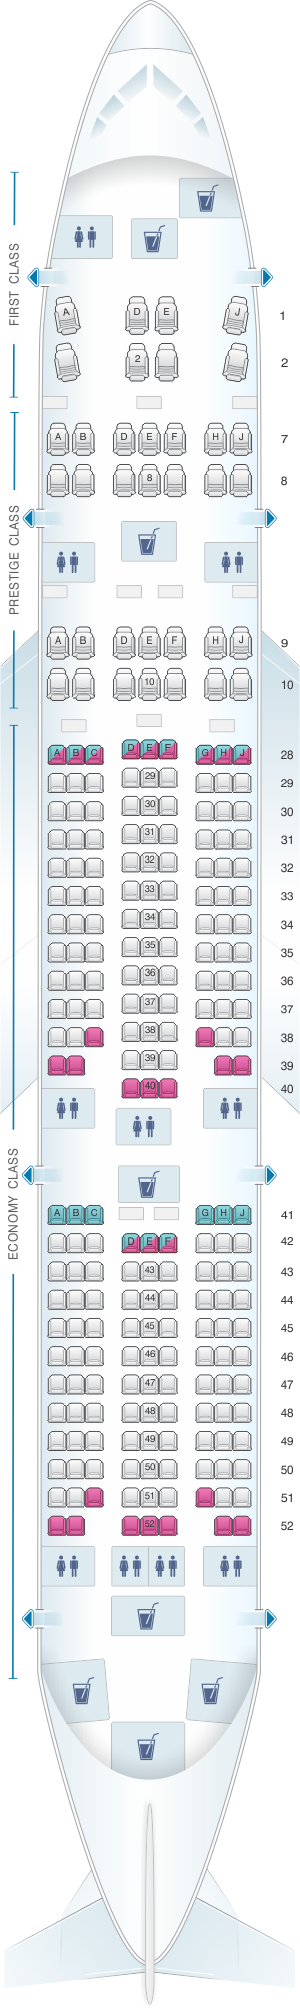 Seat map for Korean Air Boeing B777 200ER 248PAX